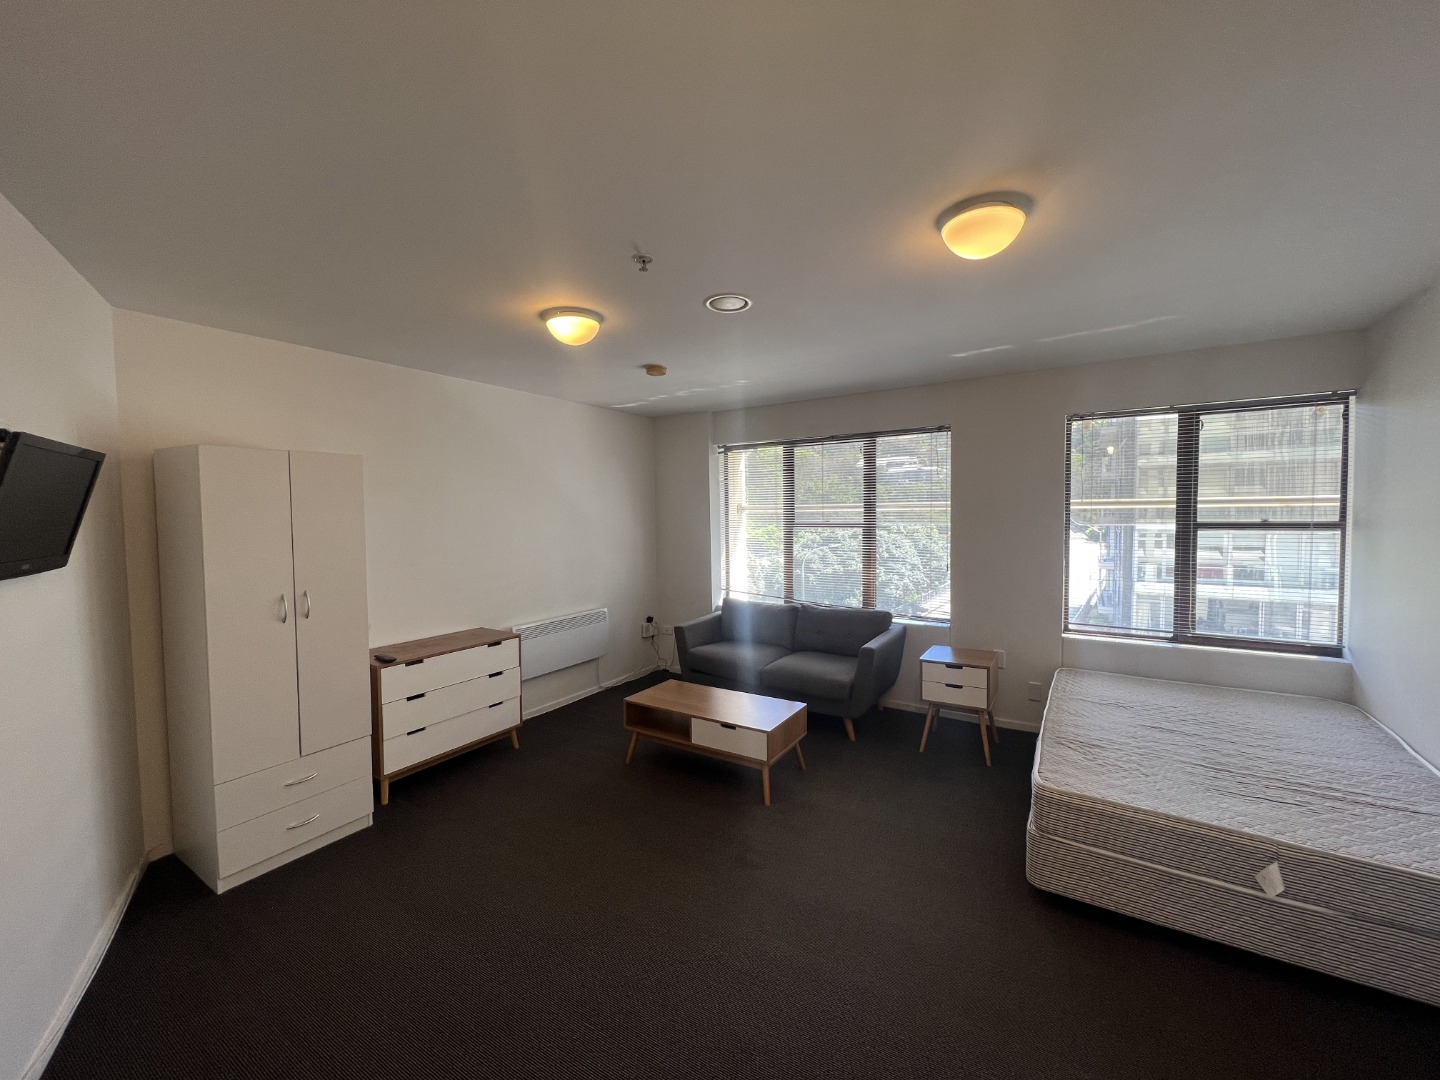 Real Estate For Rent Houses & Apartments : 902/169 The Terrace - Studio Unit, Wellington